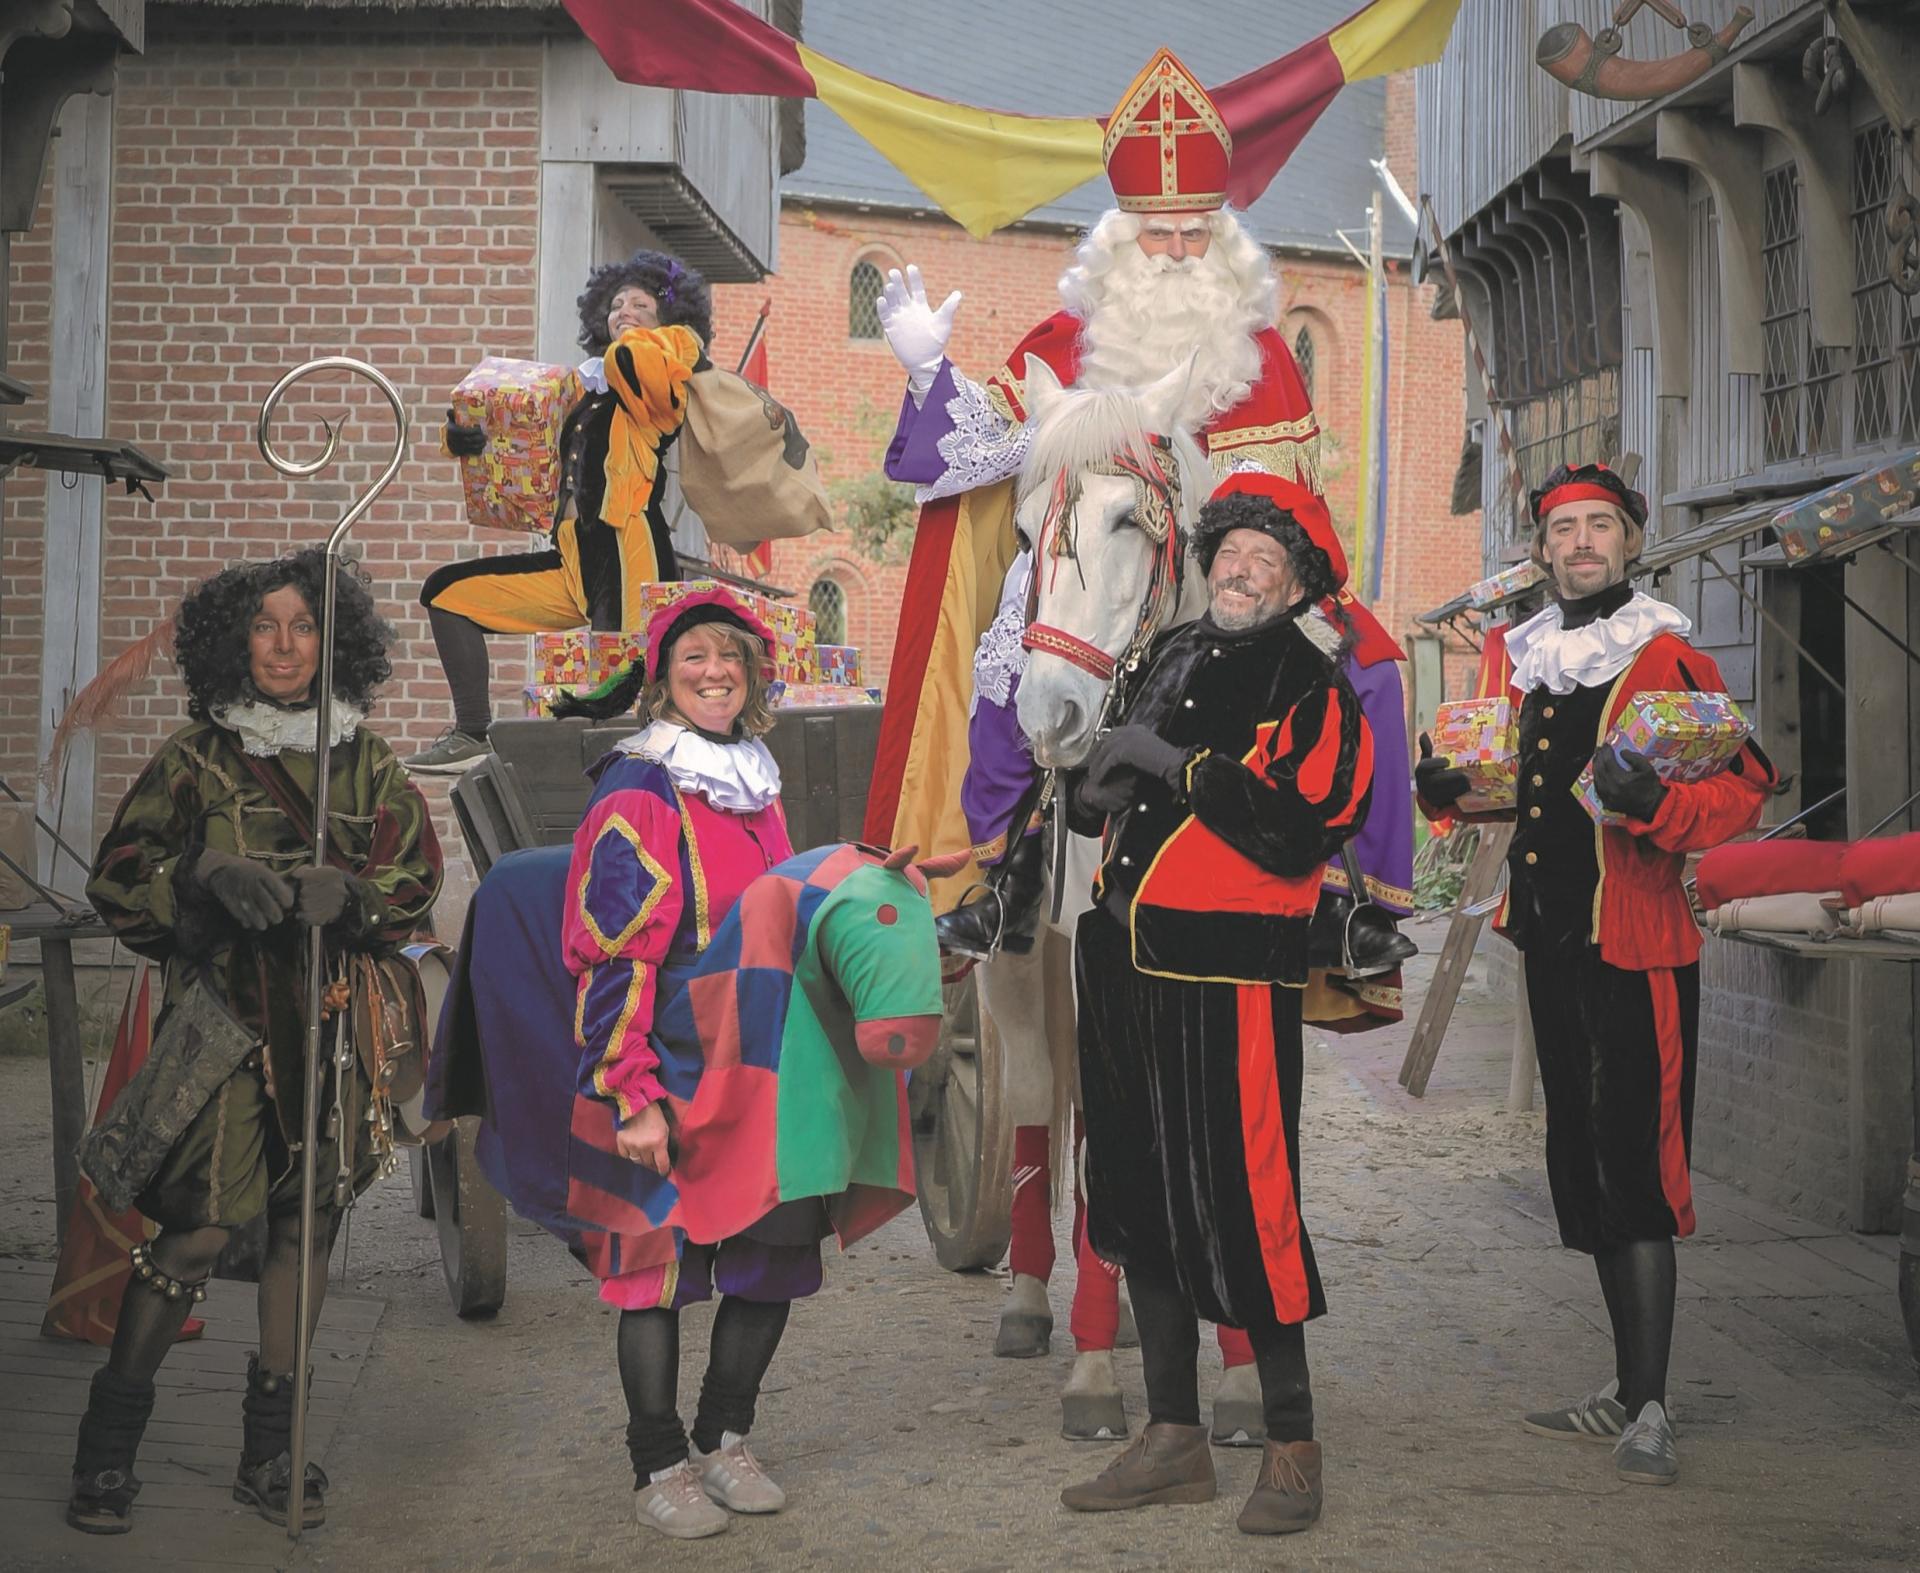 City of Sinterklaas